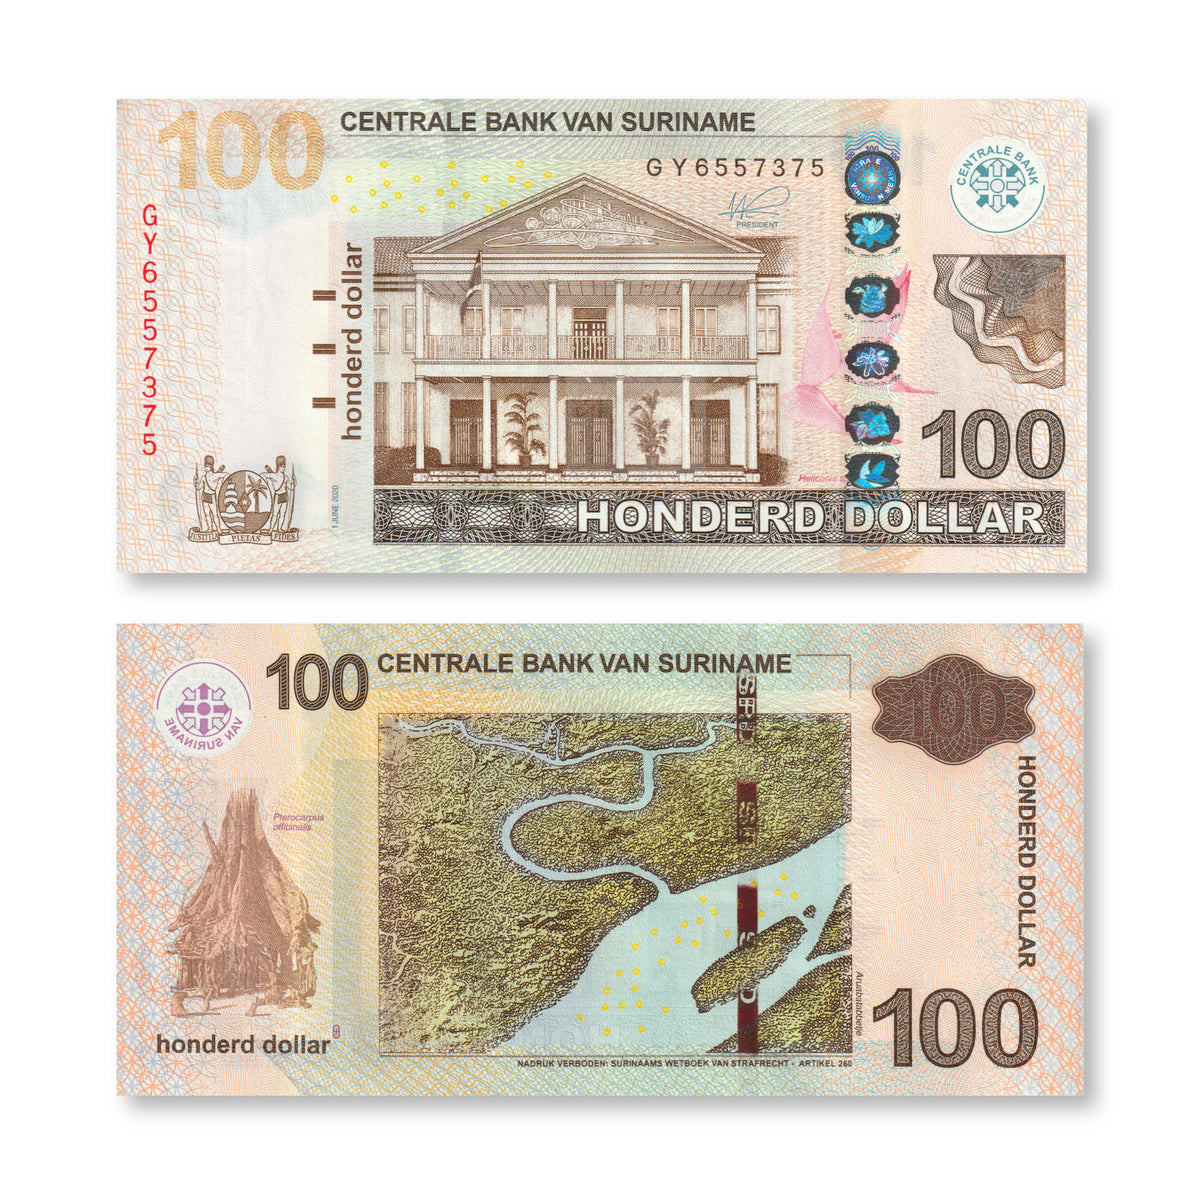 Suriname 100 Dollars, 2020, B549e, P166, UNC - Robert's World Money - World Banknotes